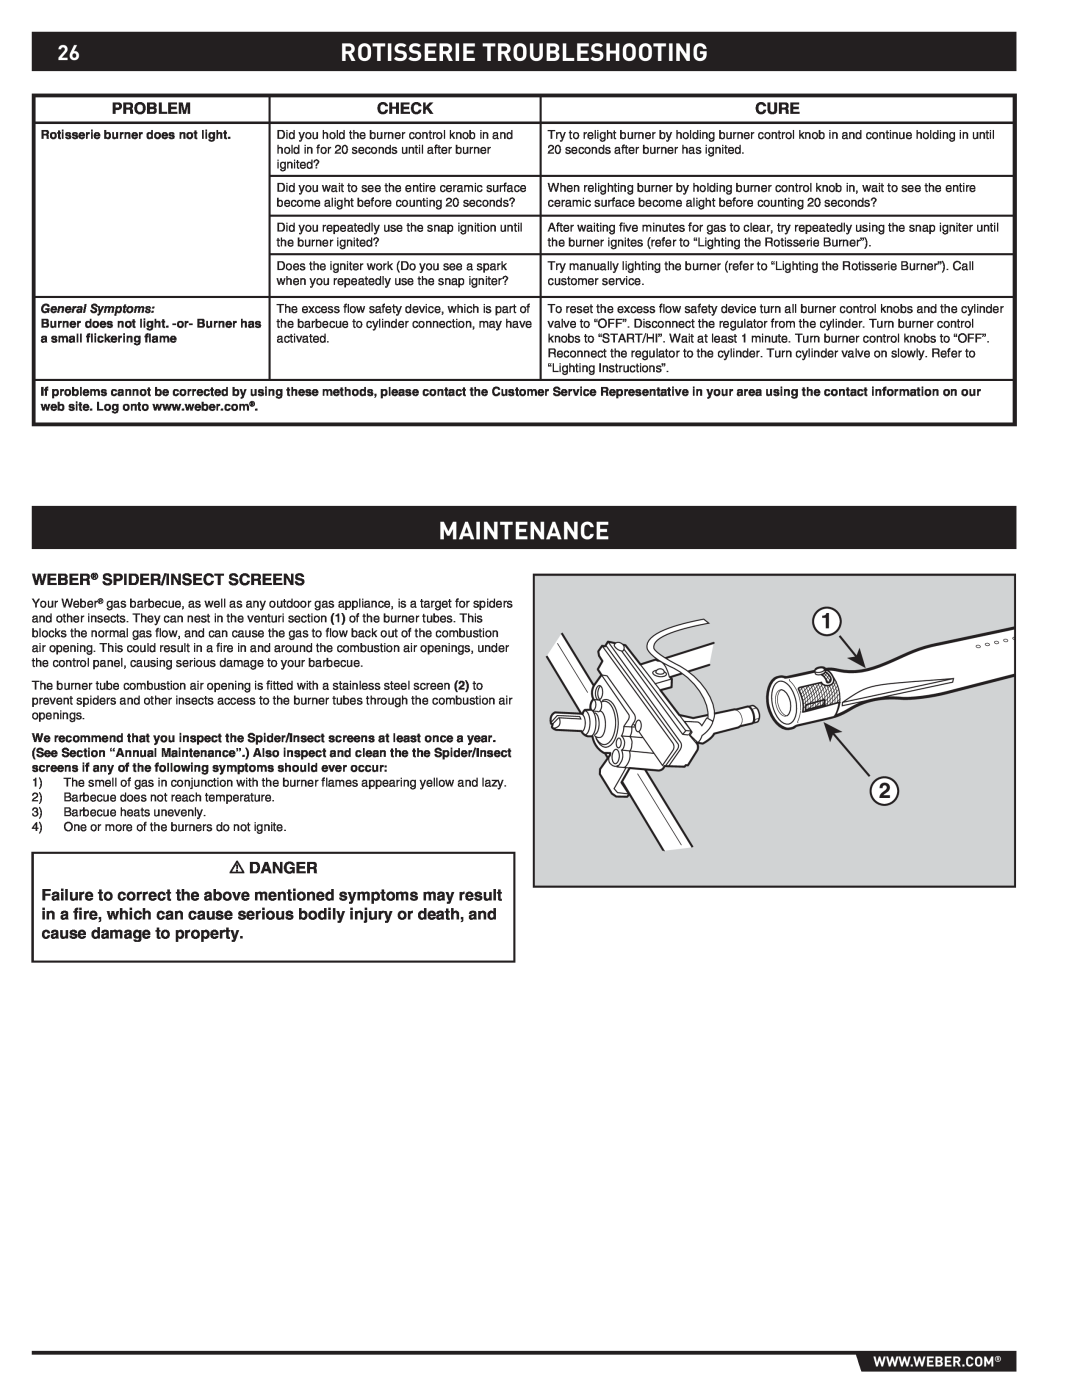 Weber S-460 manual Rotisserie Troubleshooting, Maintenance, Rotisserie burner does not light, General Symptoms 